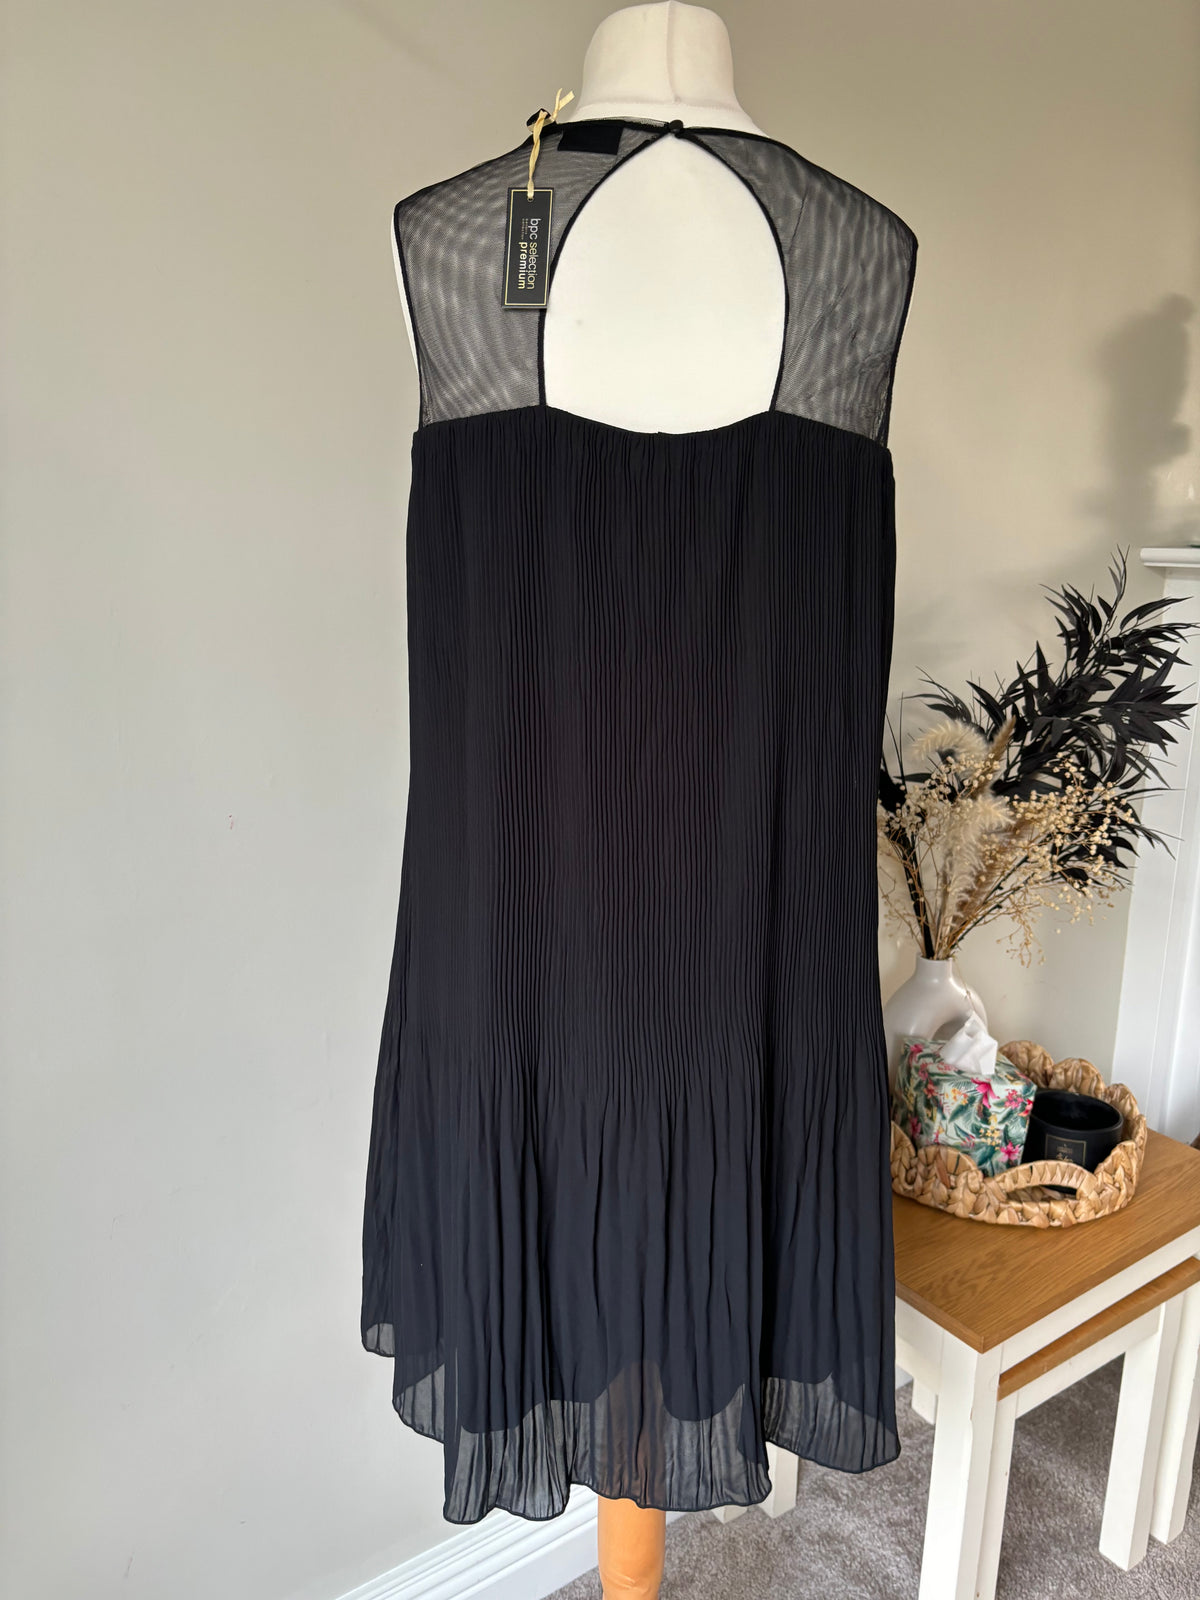 Pleated party dress by BONPRIX - size 18